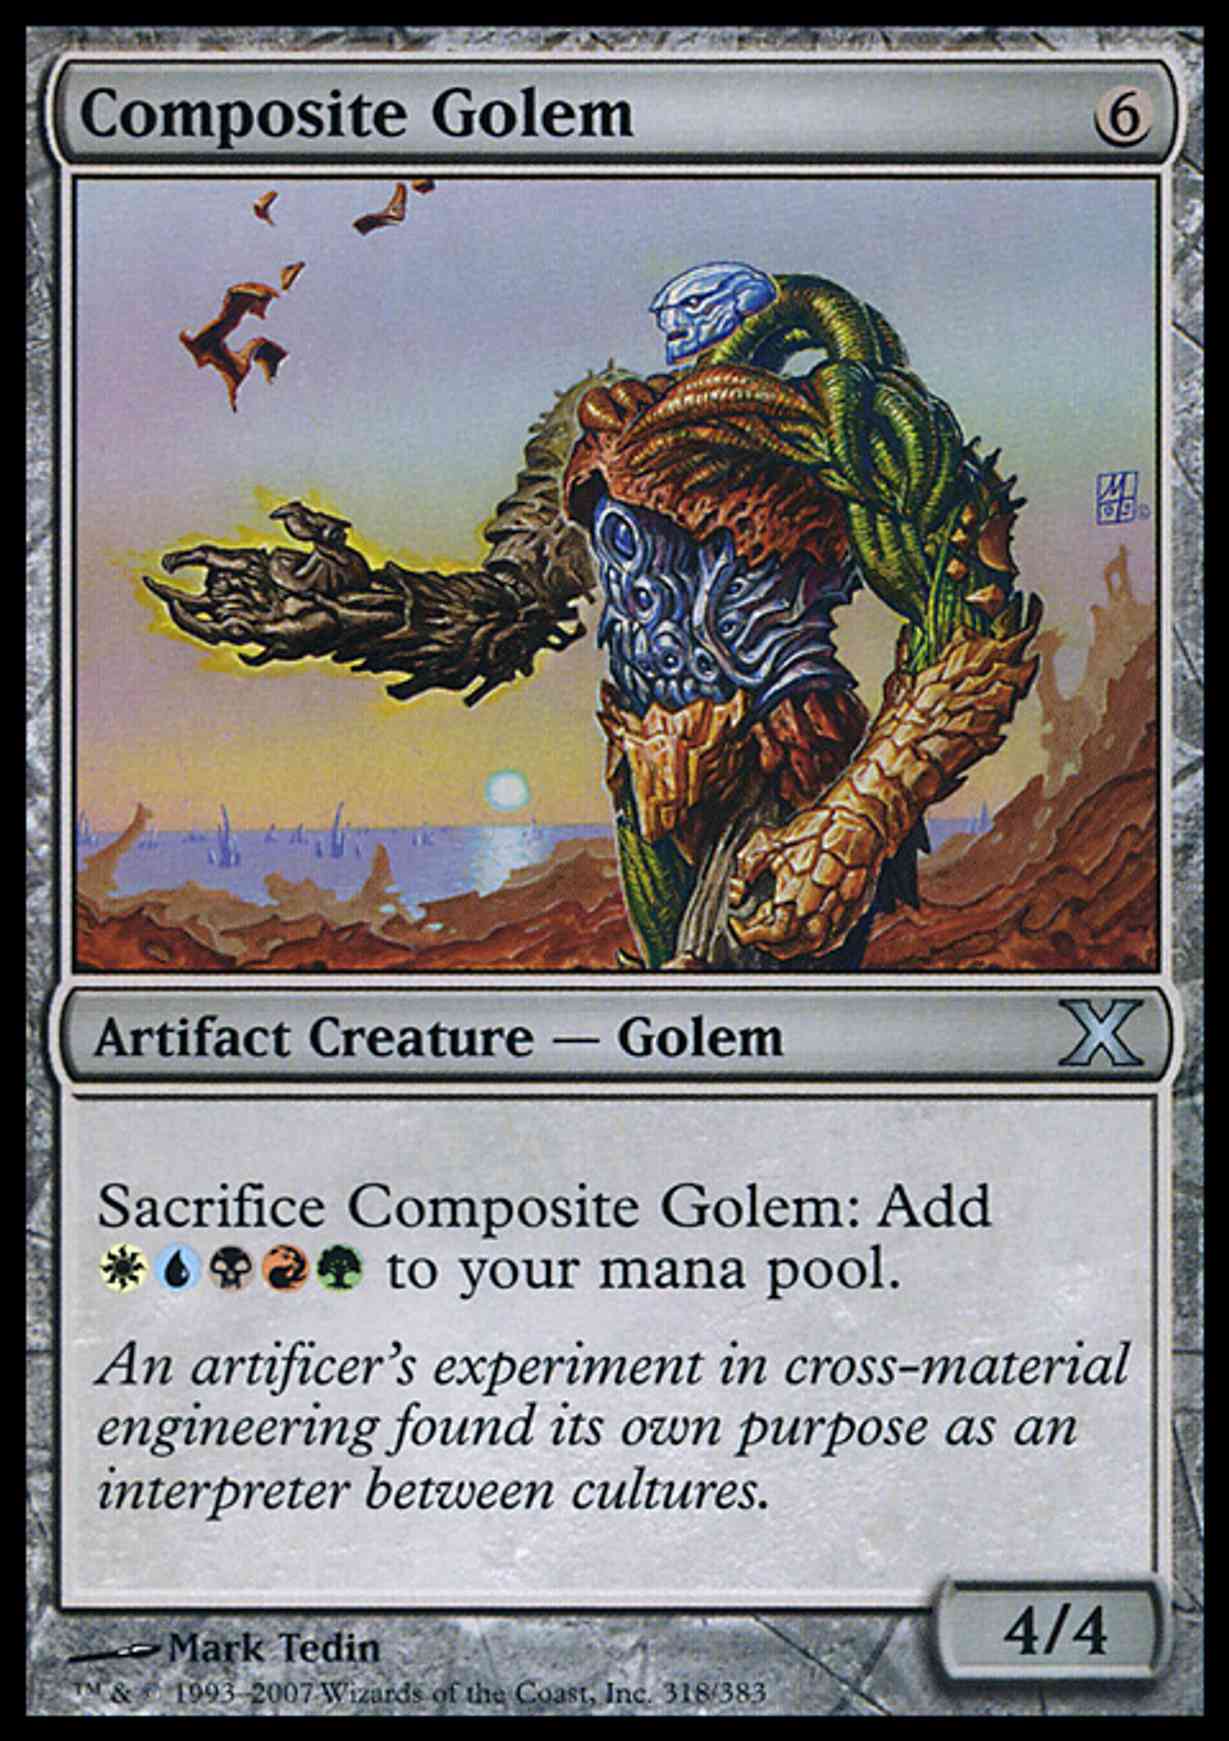 Composite Golem magic card front